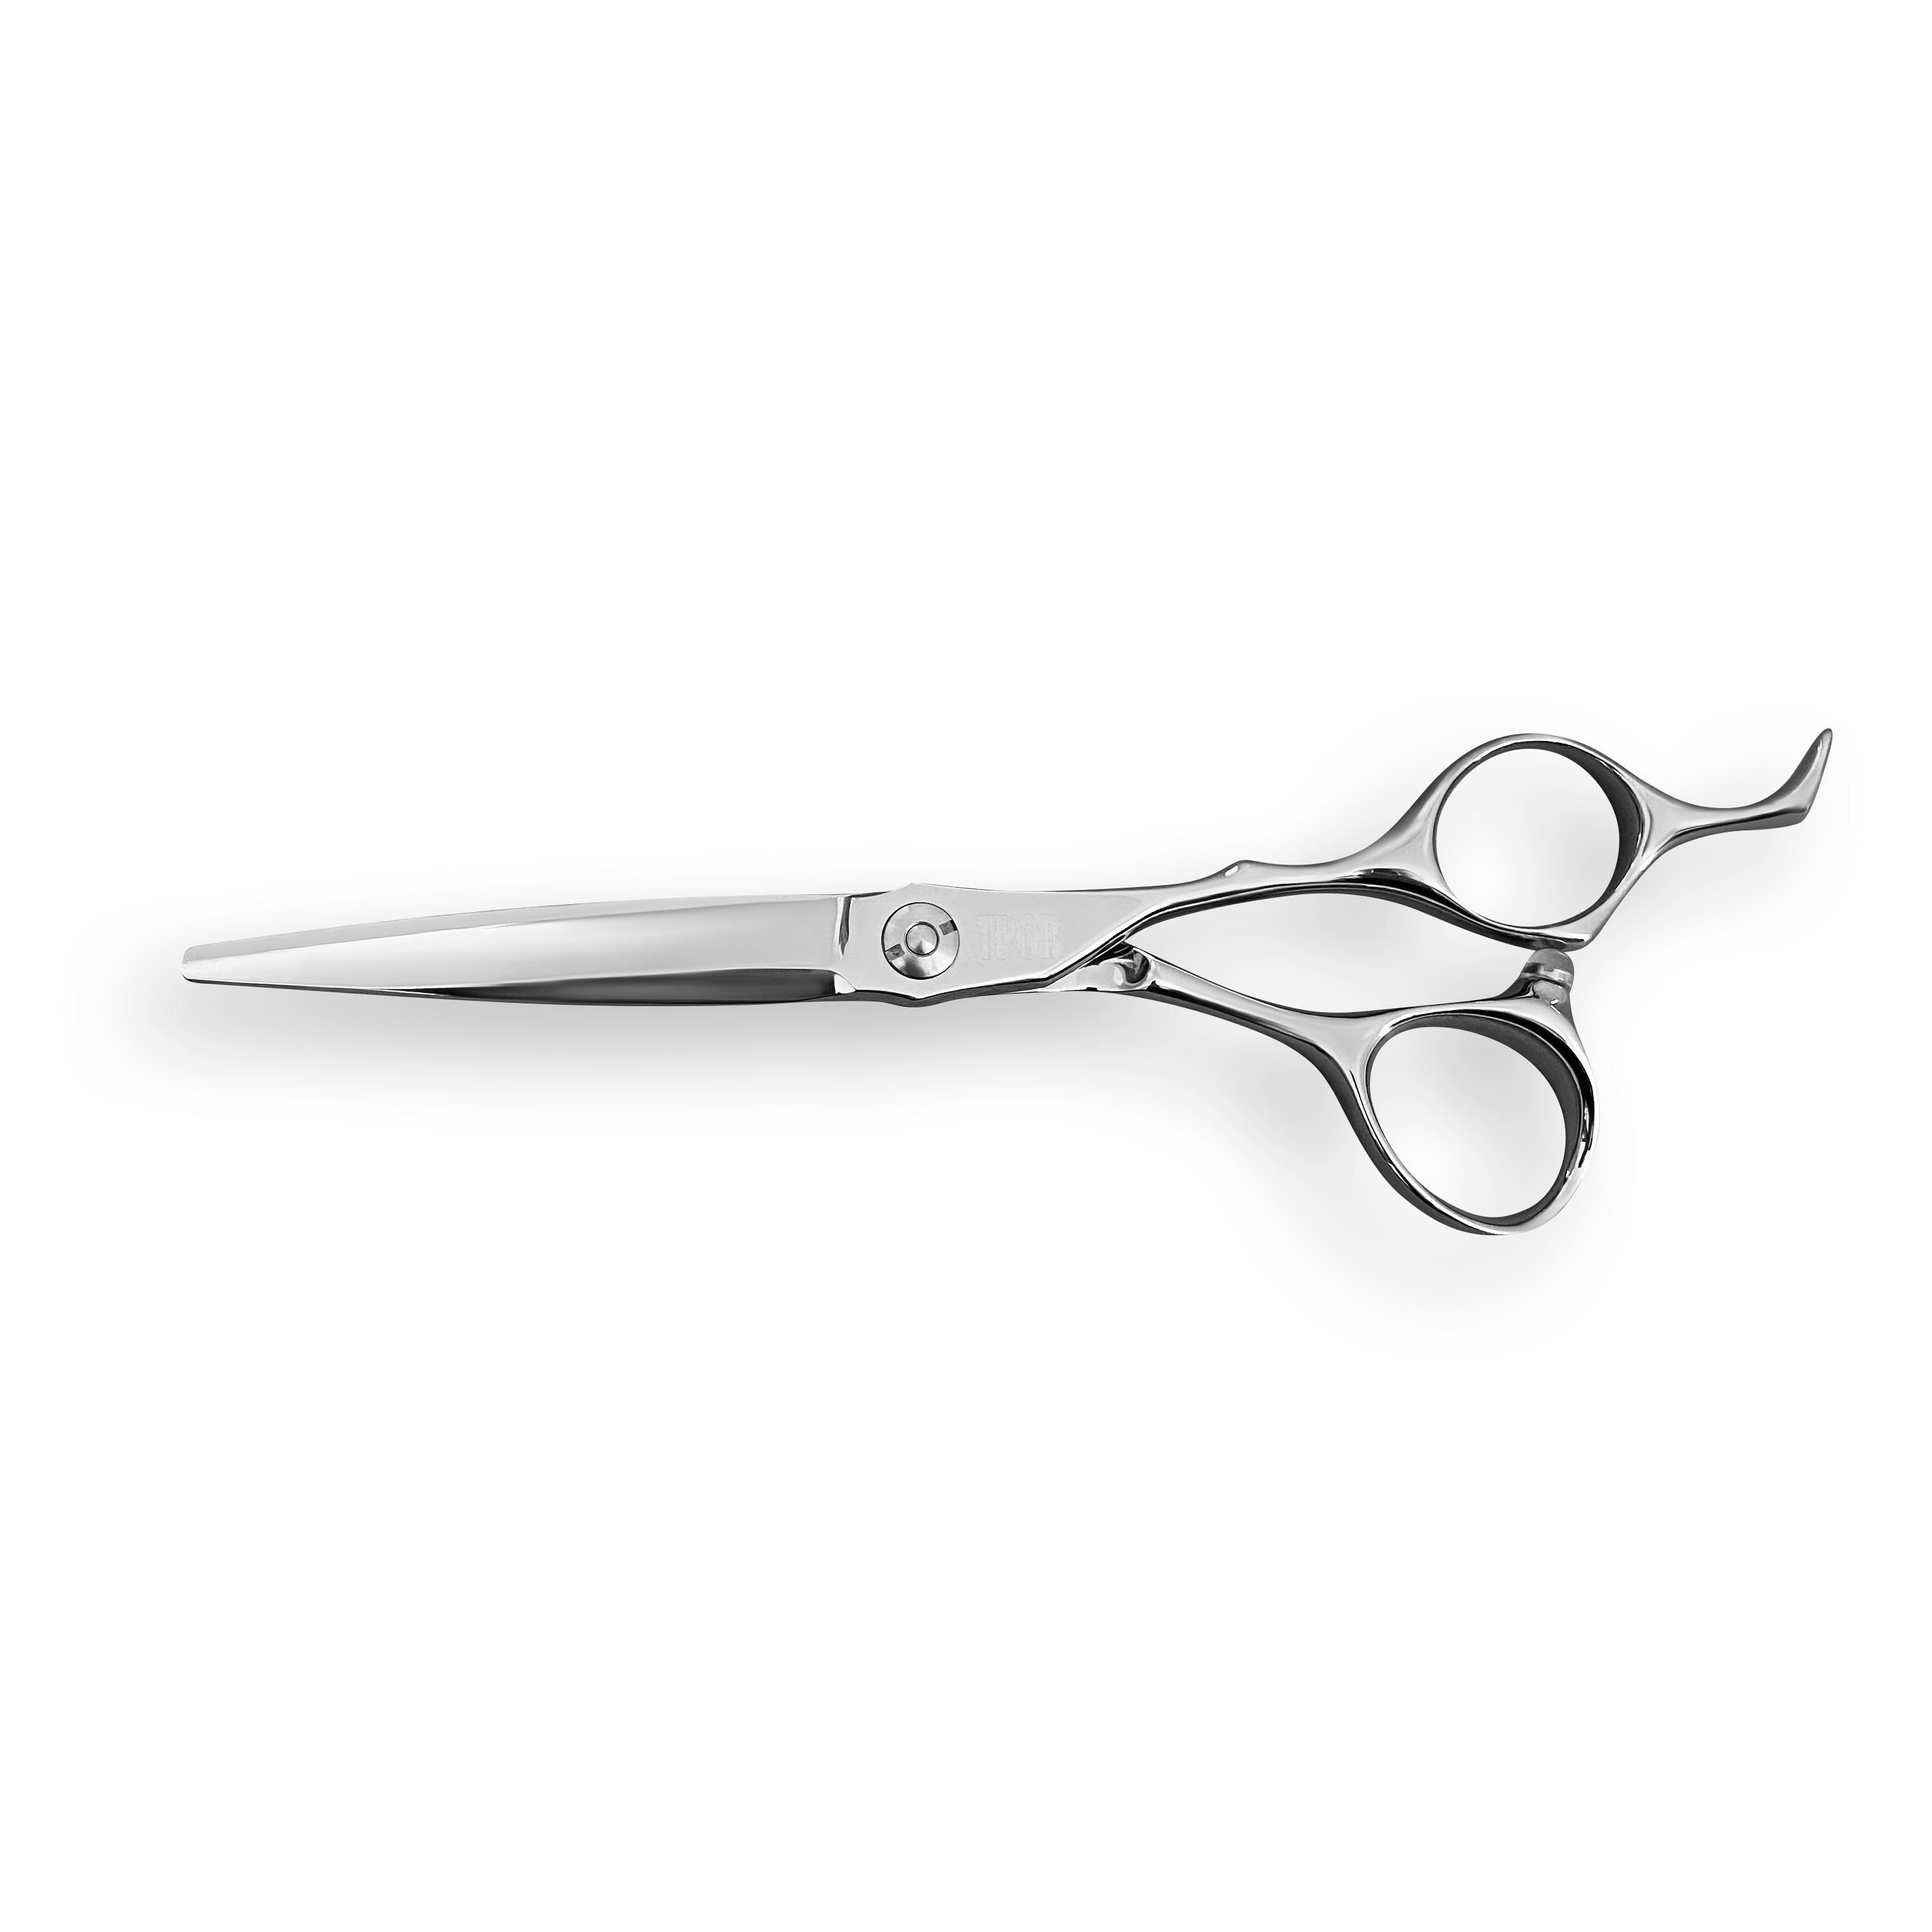 Obalus Sharp Cut Scissors